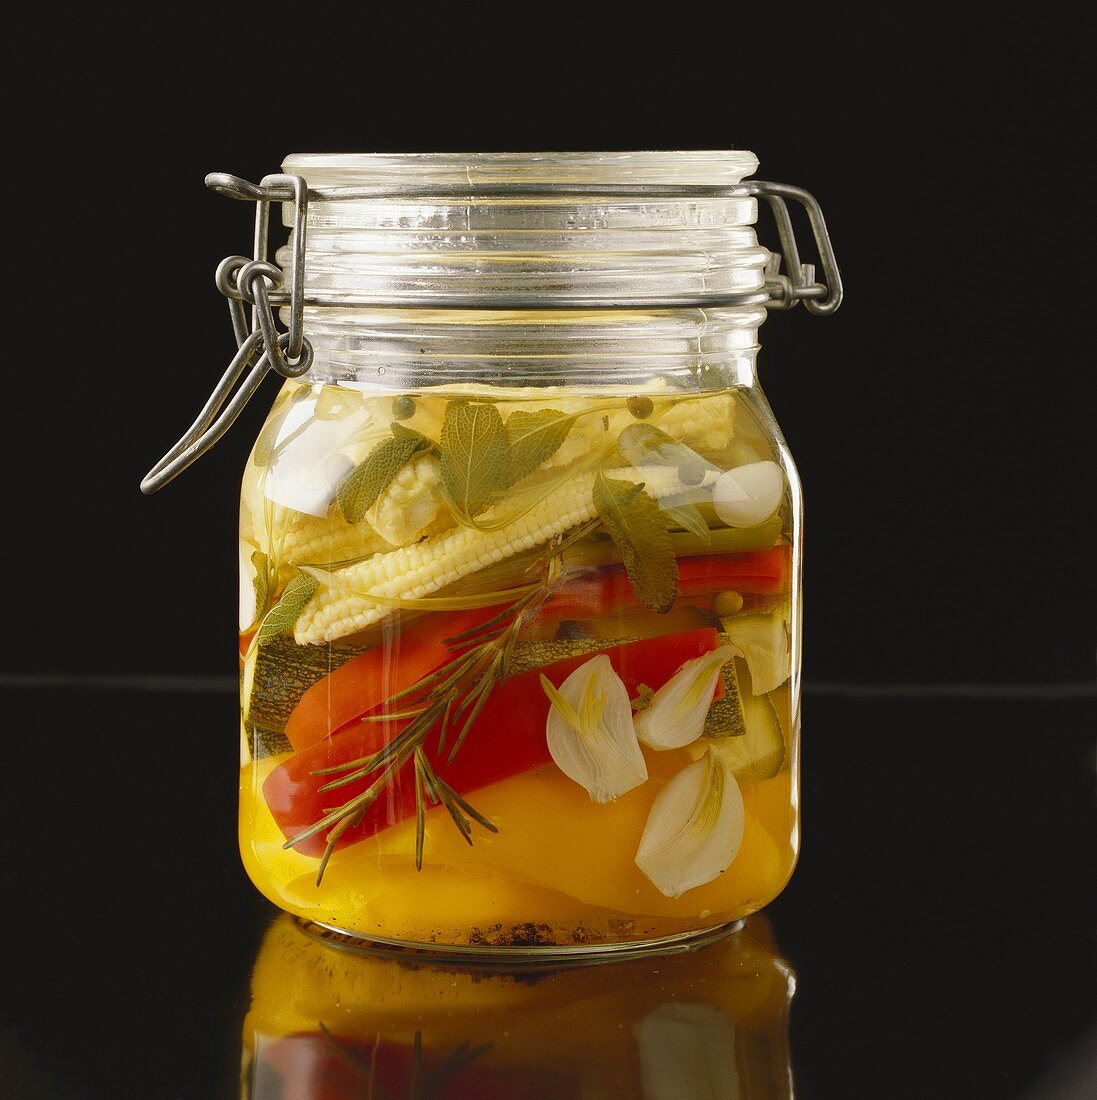 Bottled vegetables with herbs in preserving jar